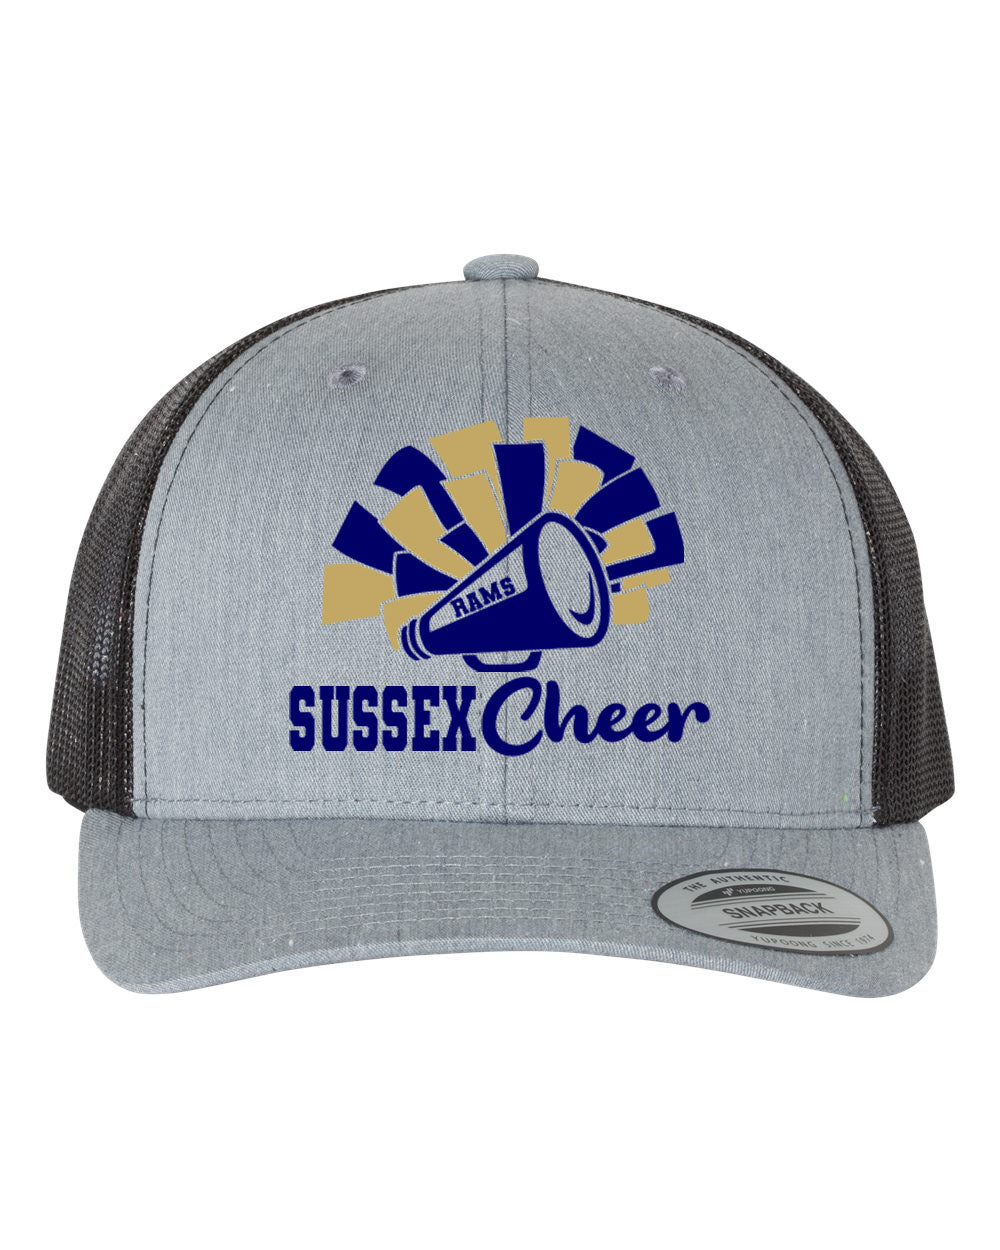 Sussex Middle Cheer Design 2 Trucker Hat